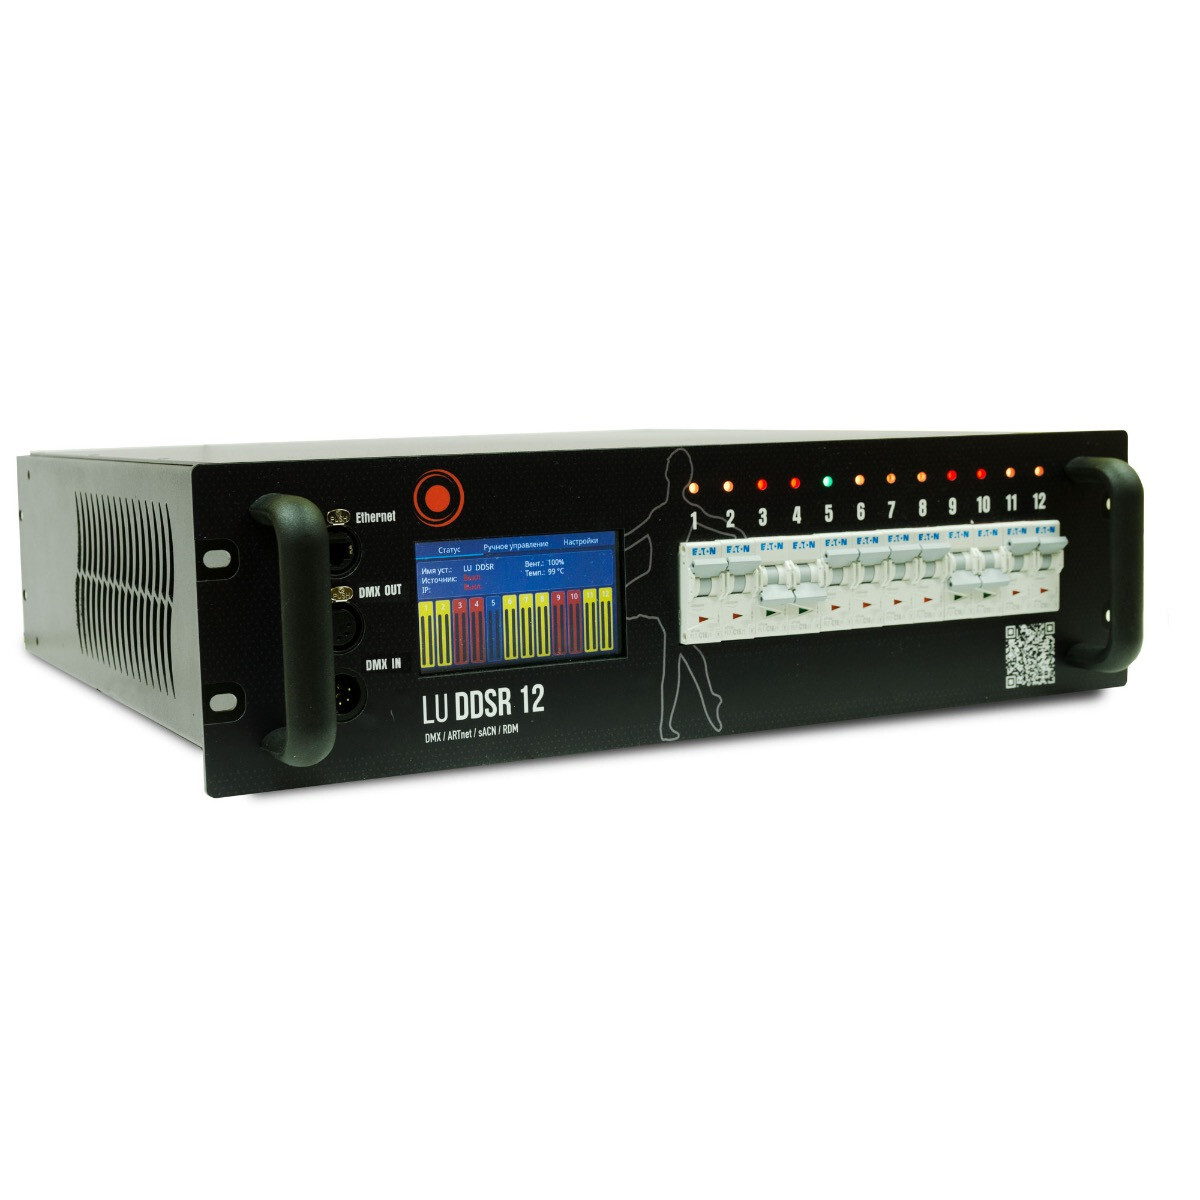 Цифровой диммер LU DDSR 12-10 Light Union